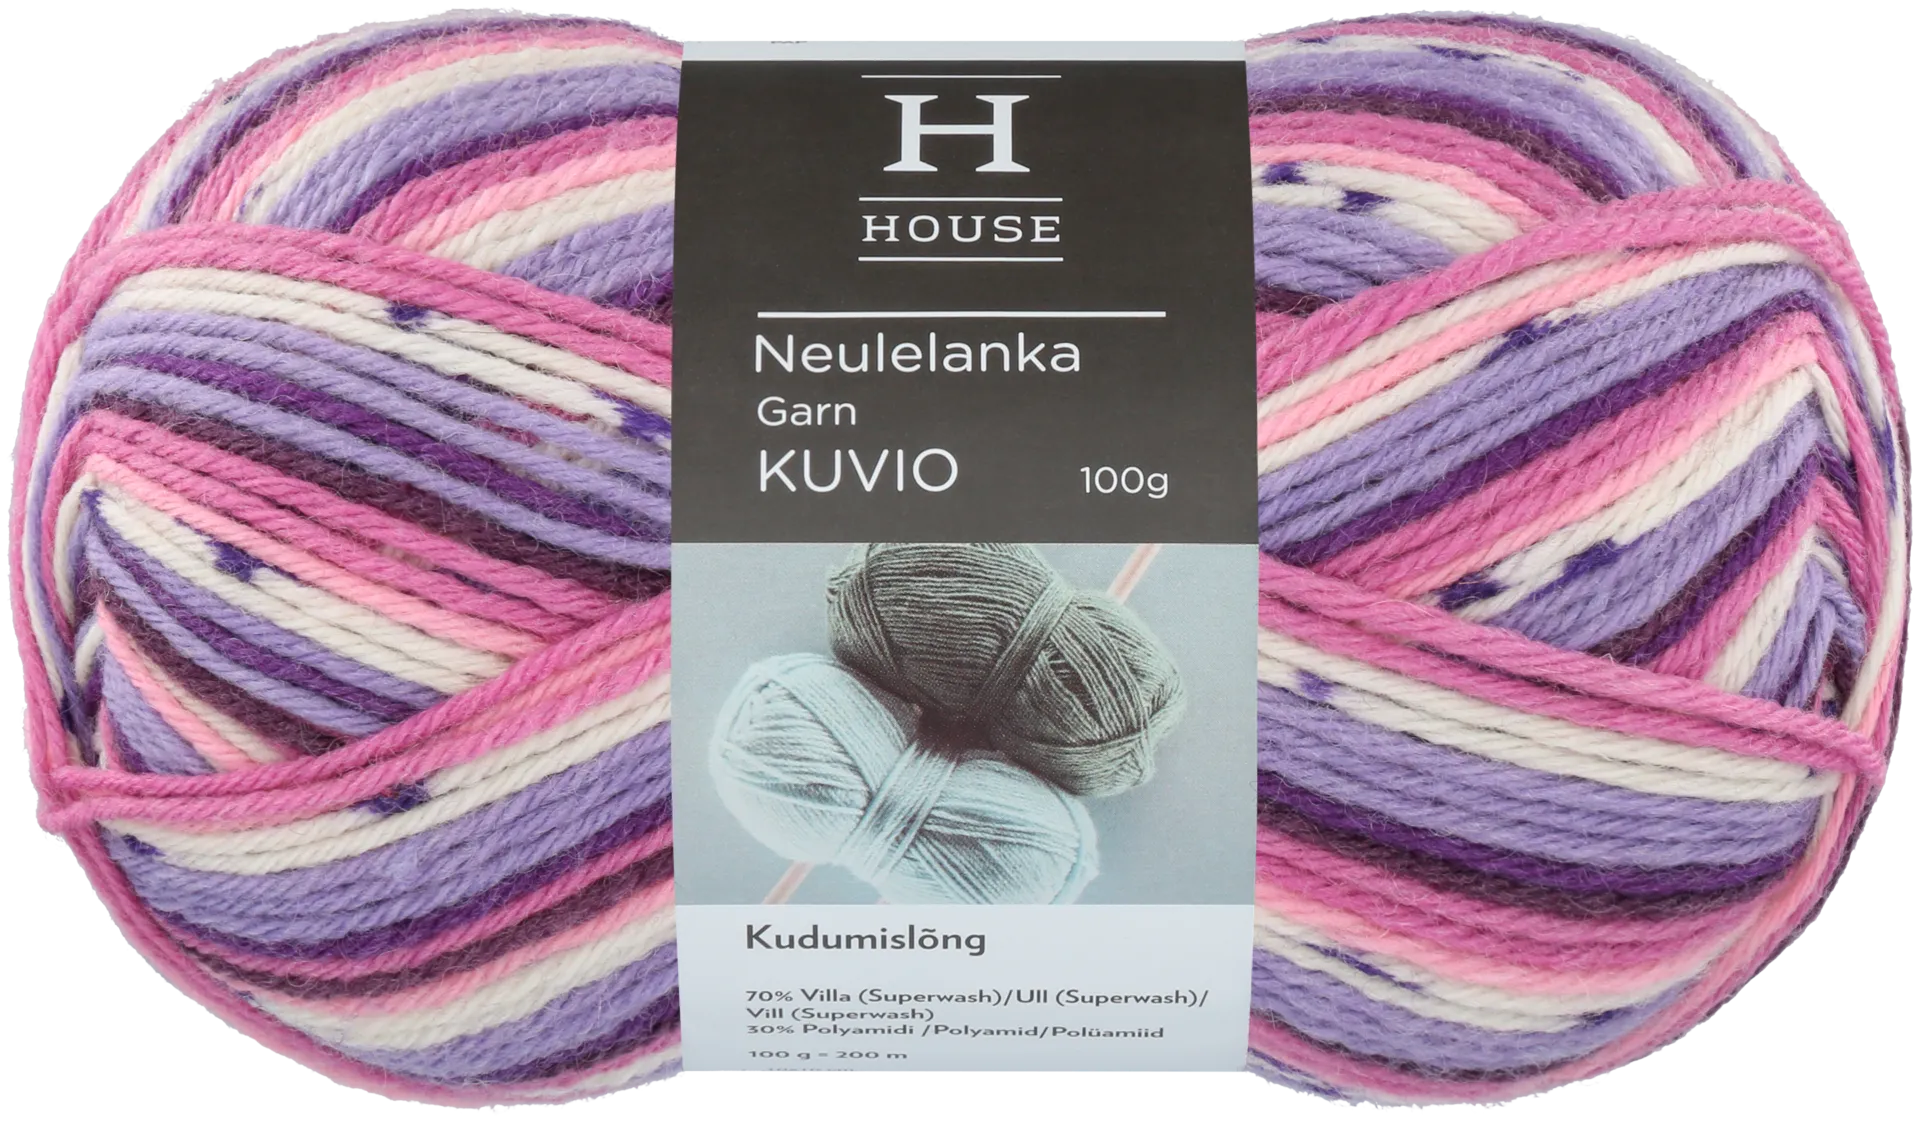 House lanka villasekoite Kuvio 100 g Lilac/pink/white 82456 - 1